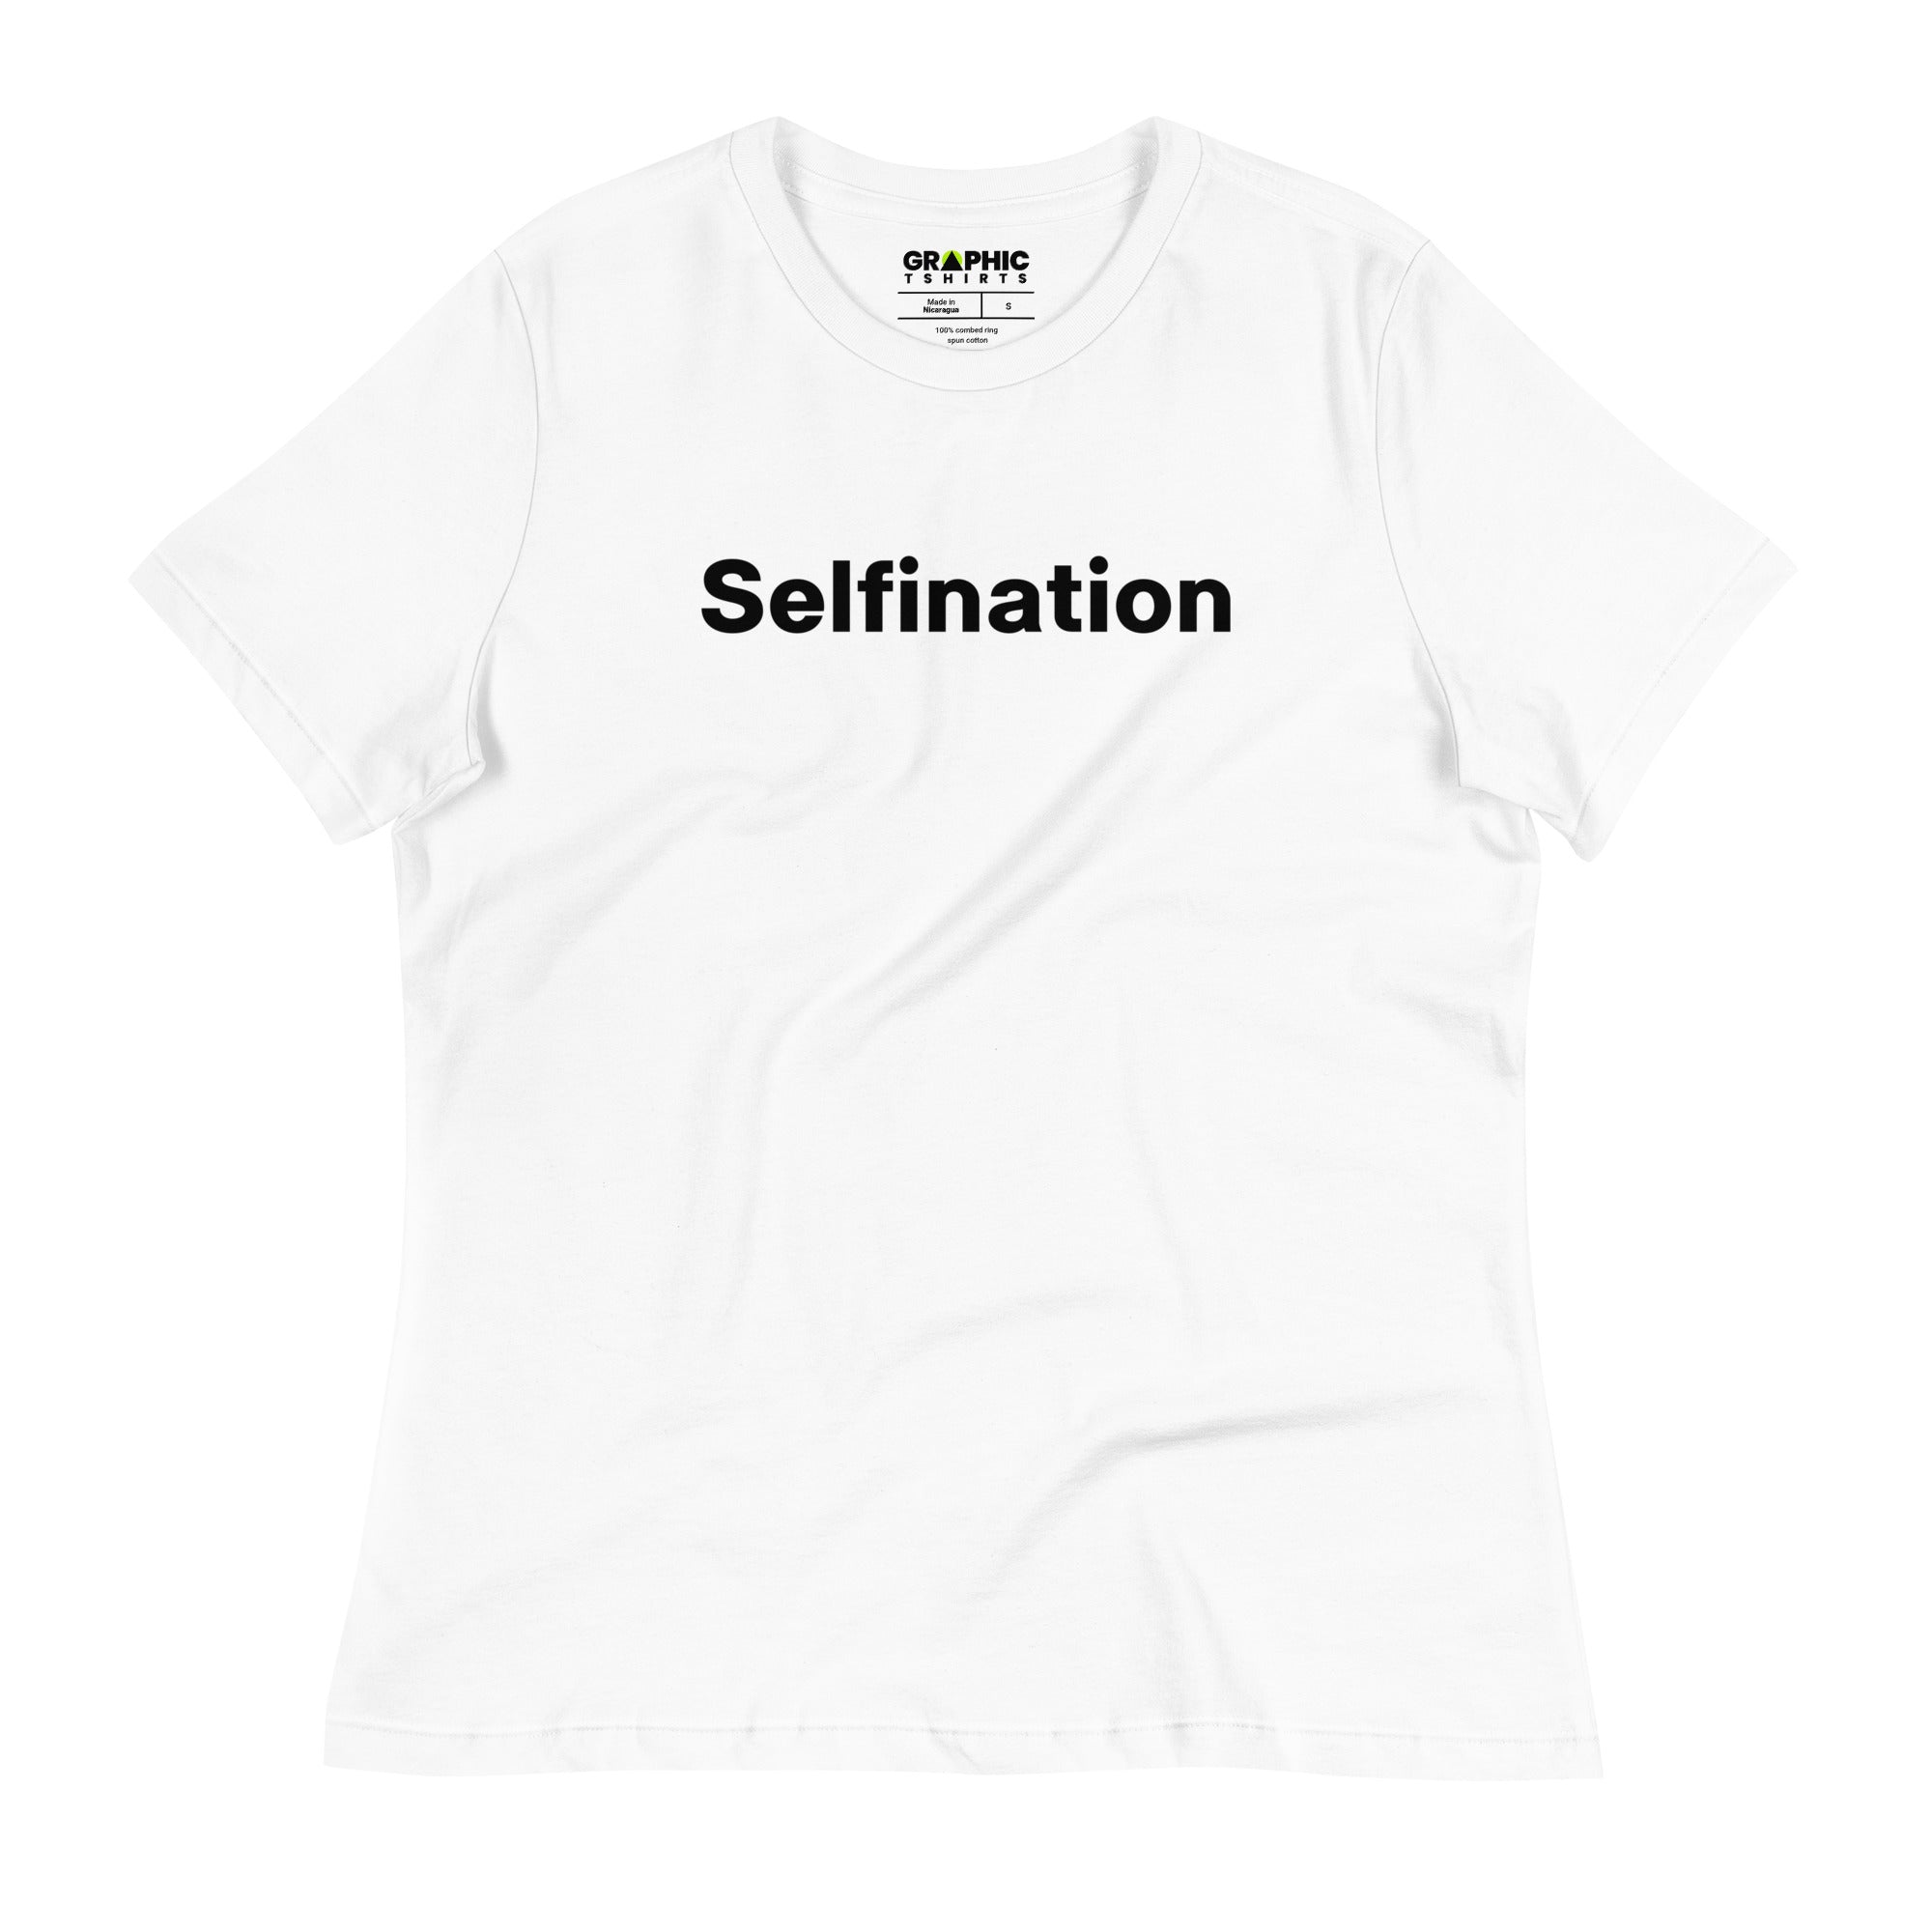 Women's Relaxed T-Shirt - Selfination - GRAPHIC T-SHIRTS